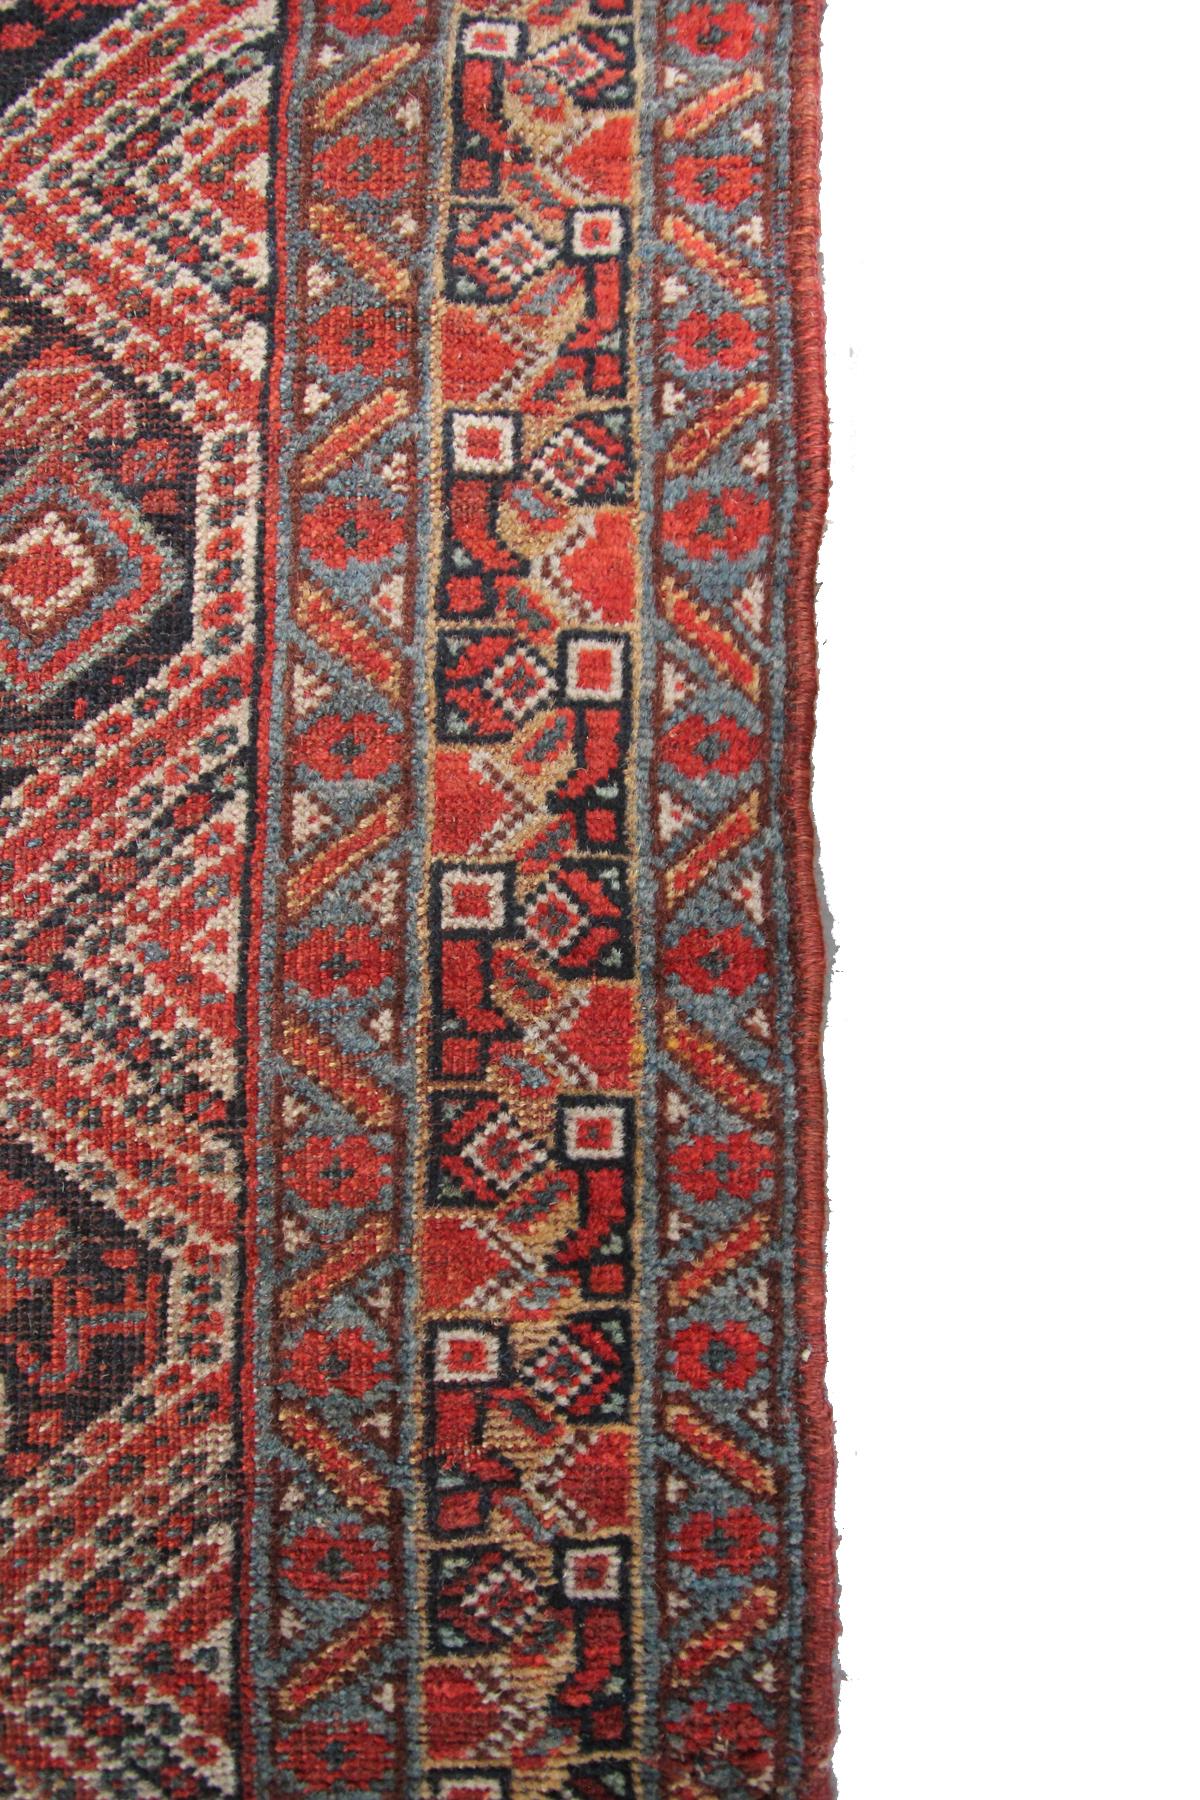 Antique Caucasian Khamseh Caucasian Kazak Rug Runner Geometric, 1890 For Sale 3